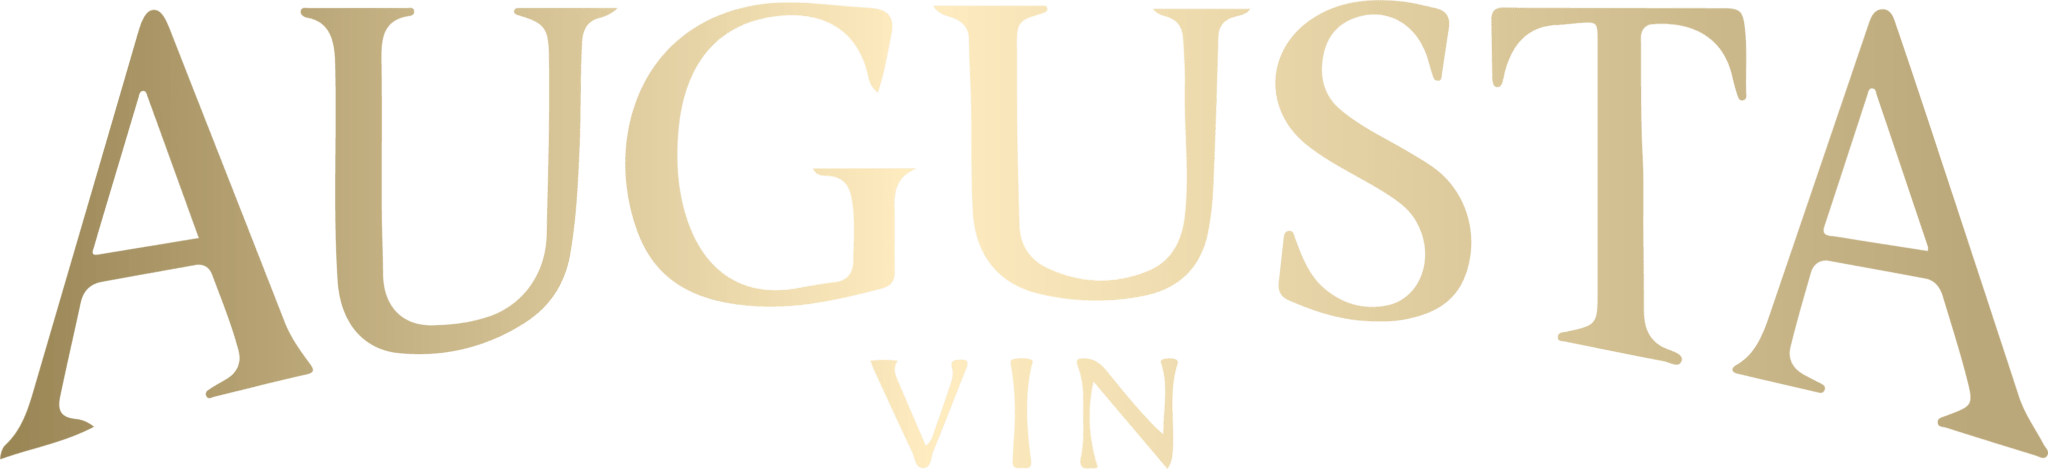 Augusta Vin uses the Wine Club eSignature app for Commerce7 by Ventura